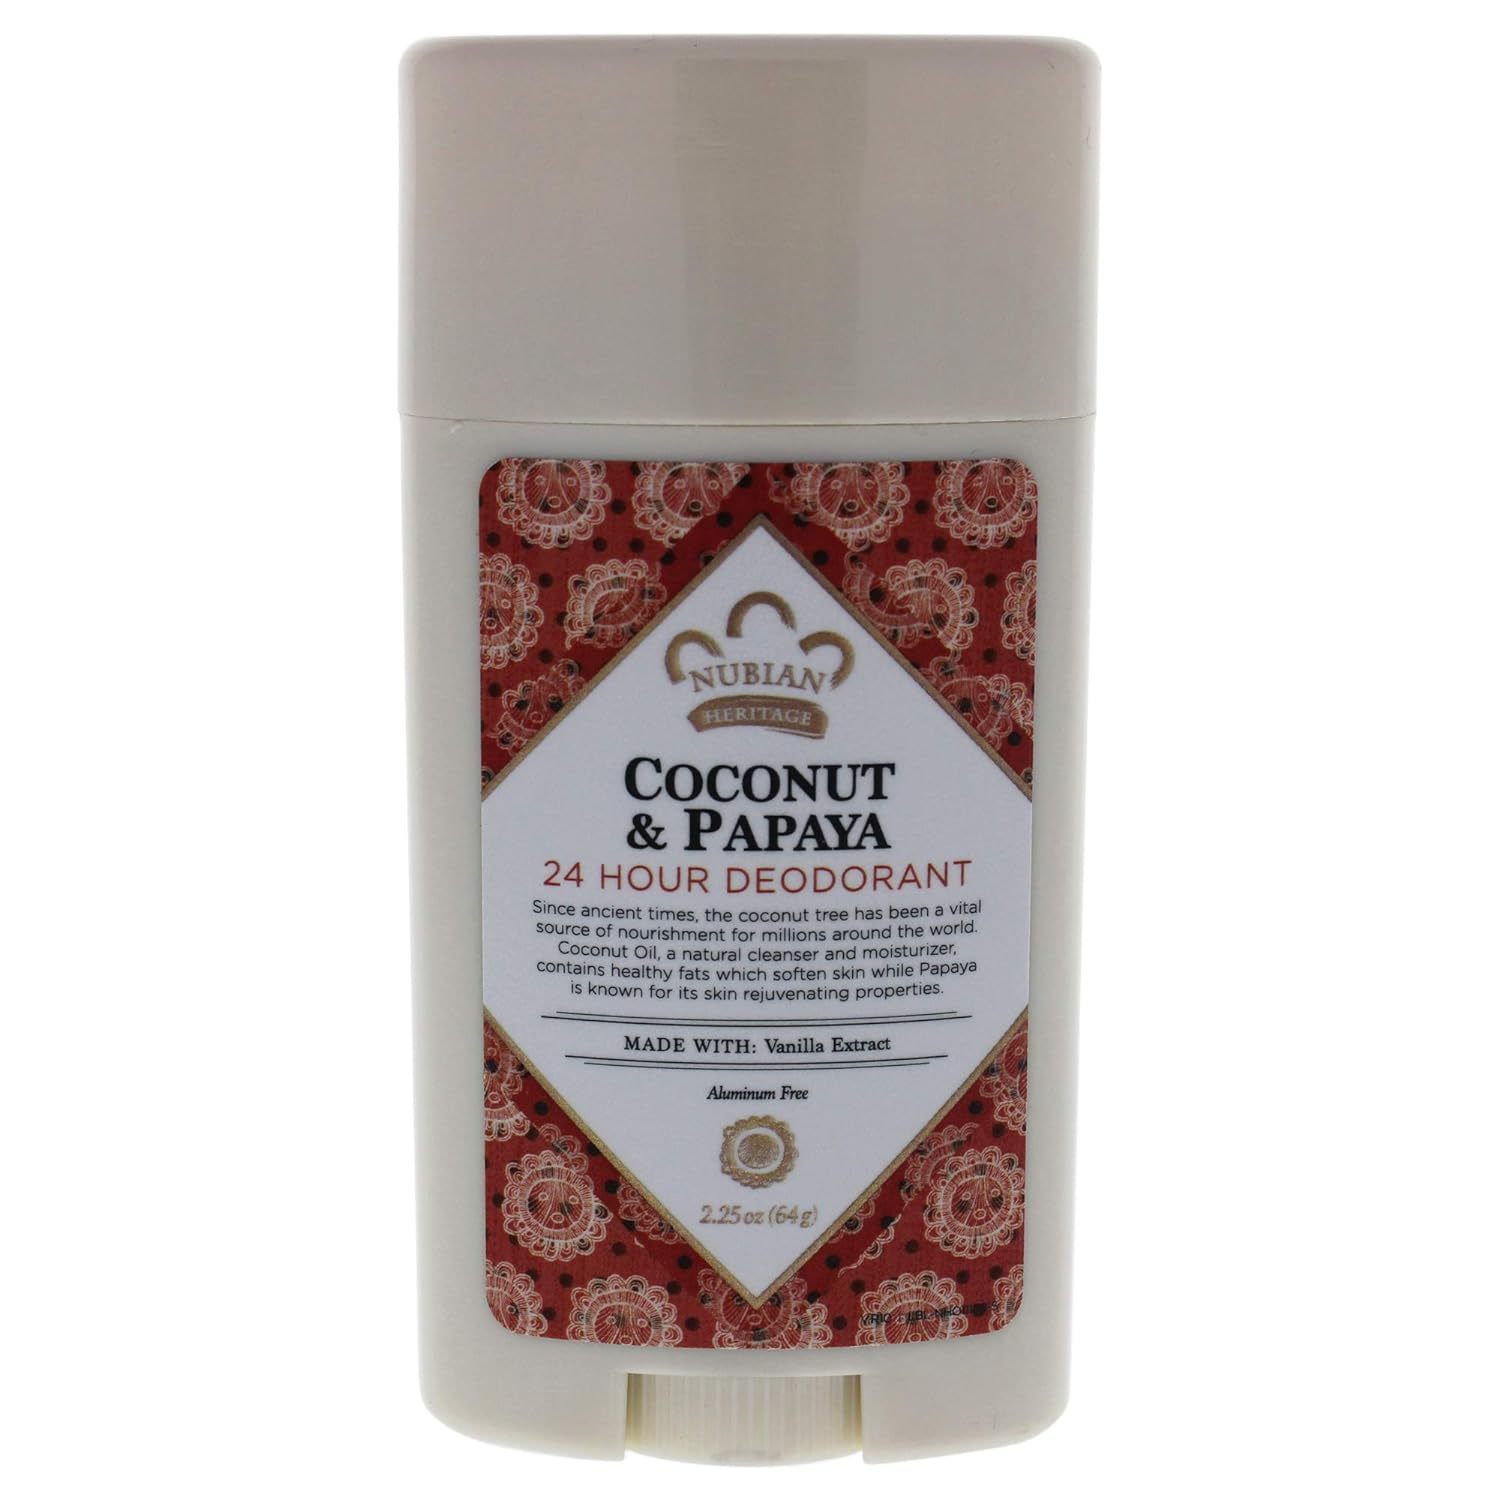 Nubian Heritage 24 Hour Deodorant, Coconut/Papaya with Vanilla Oil,2.25 Ounces - $19.99